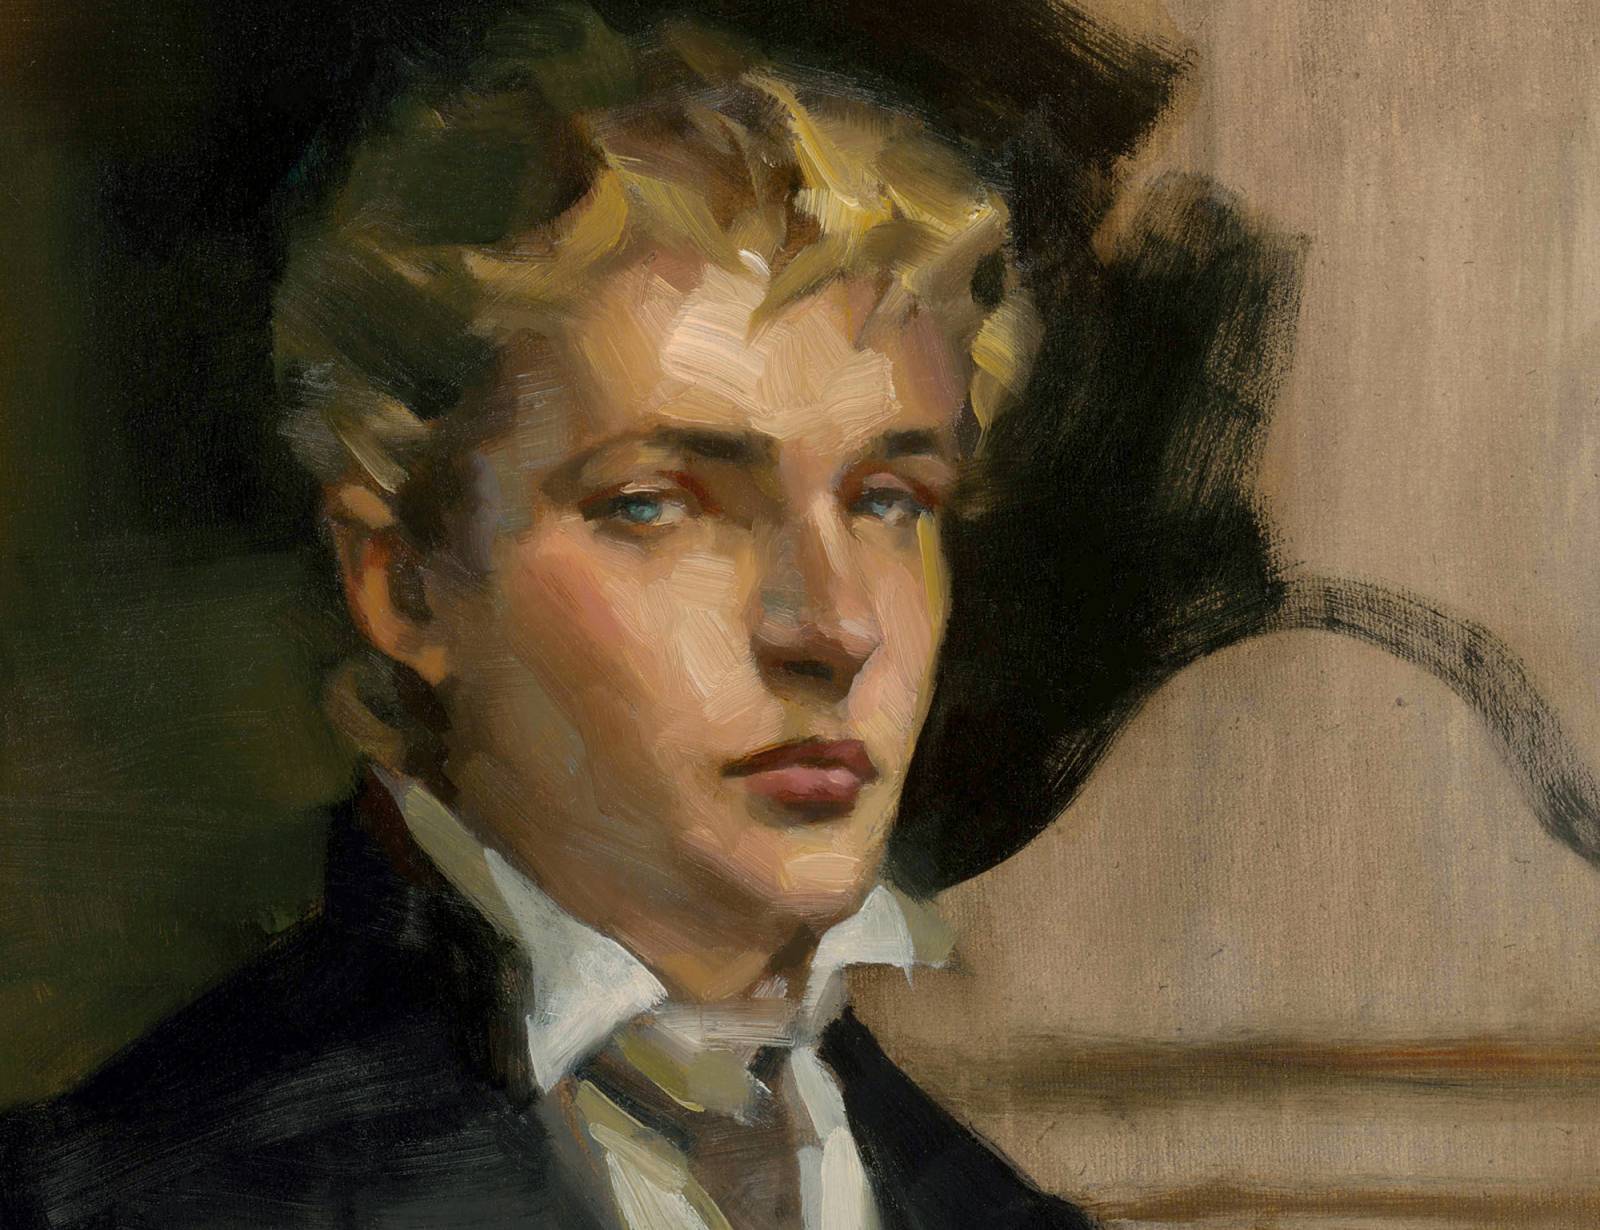 The Portrait of Dorian Gray